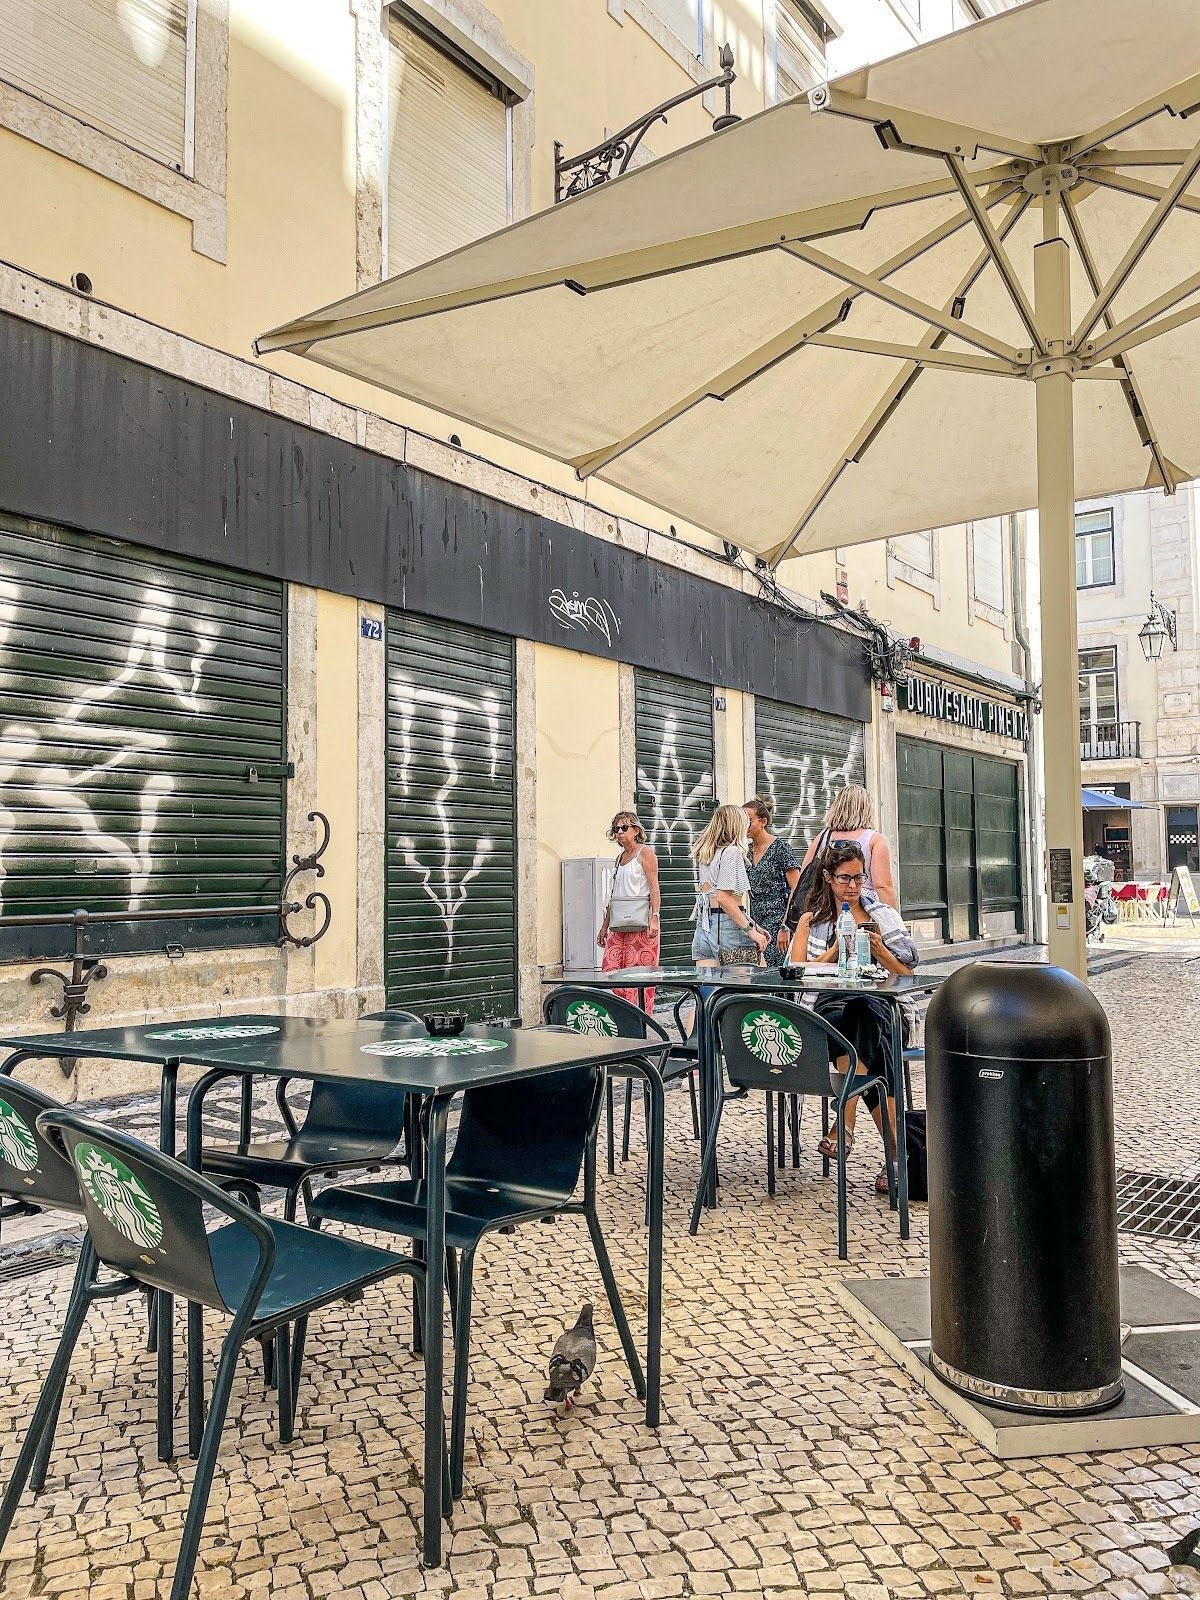 <span class="translation_missing" title="translation missing: en.meta.location_title, location_name: Starbucks @ R. de Santa Justa, city: Lisbon">Location Title</span>